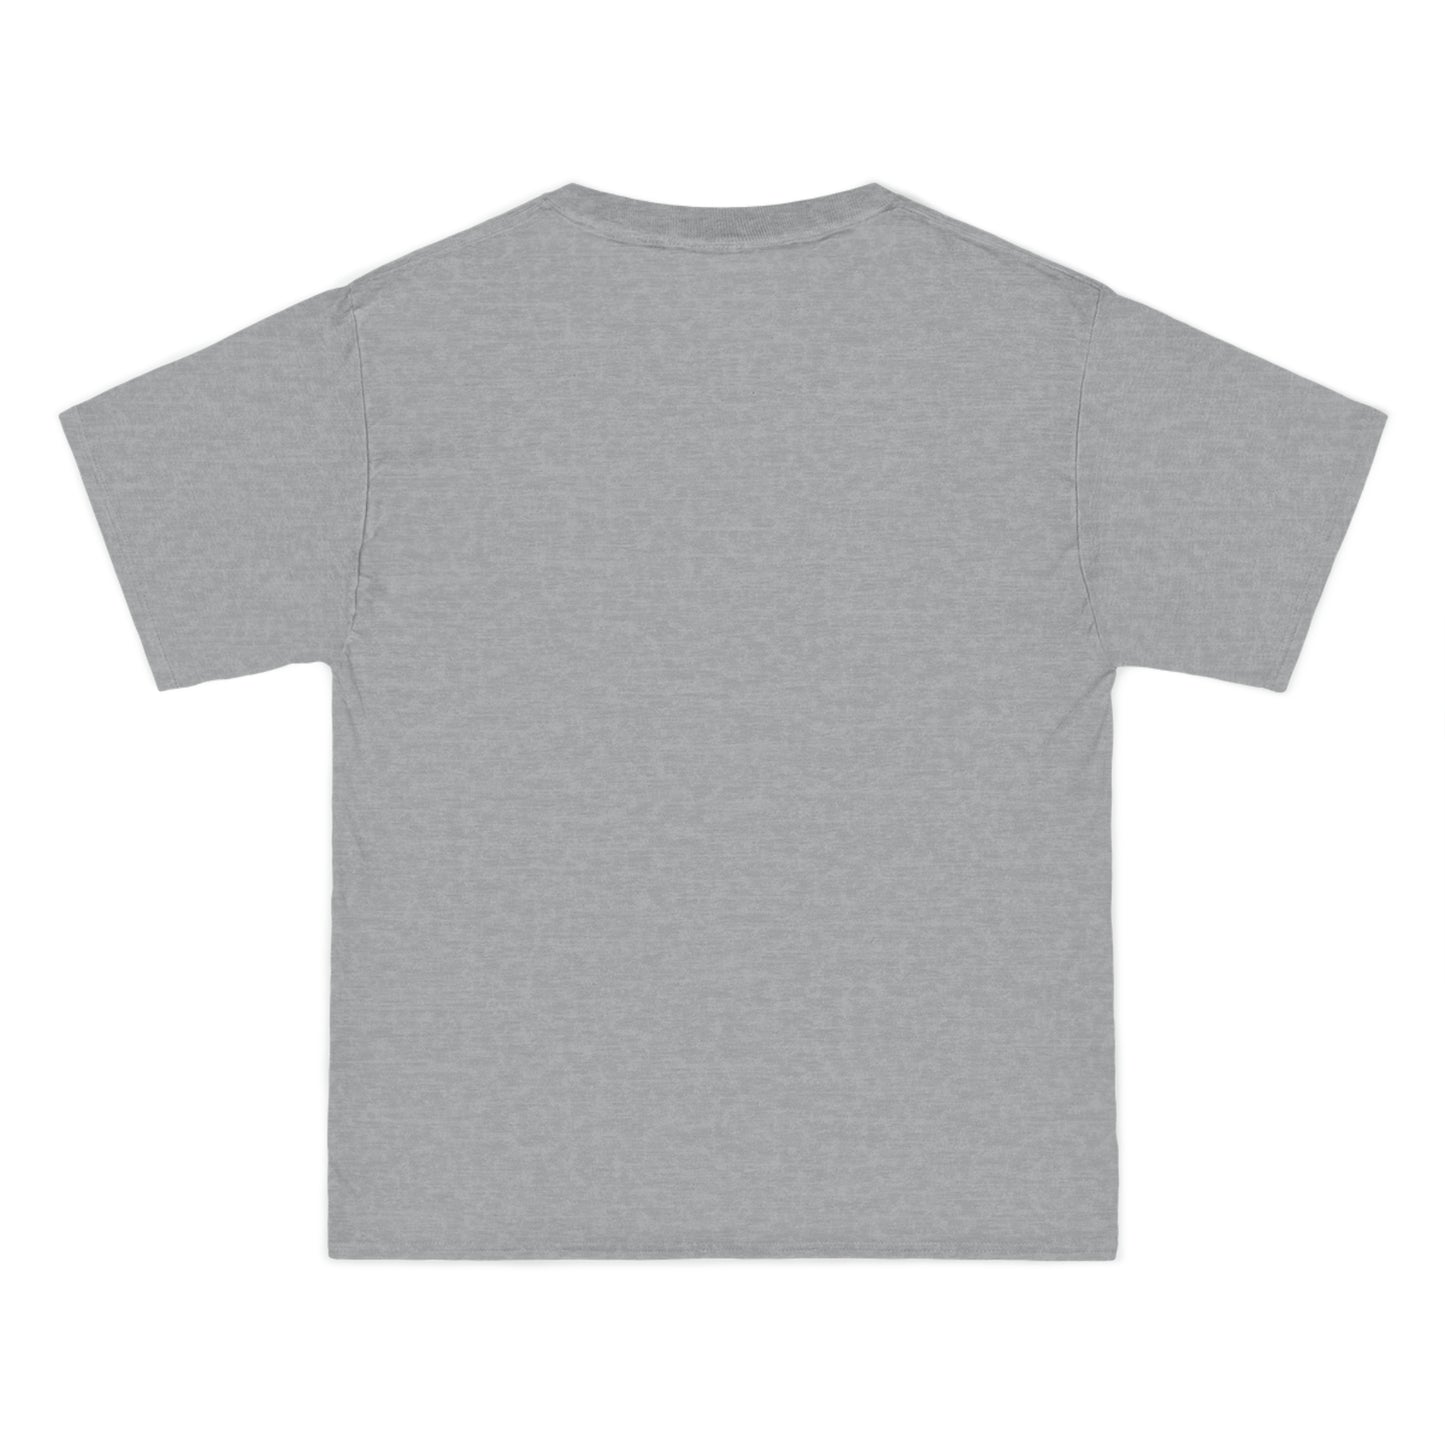 Red Fox Retro Short-Sleeve T-Shirt